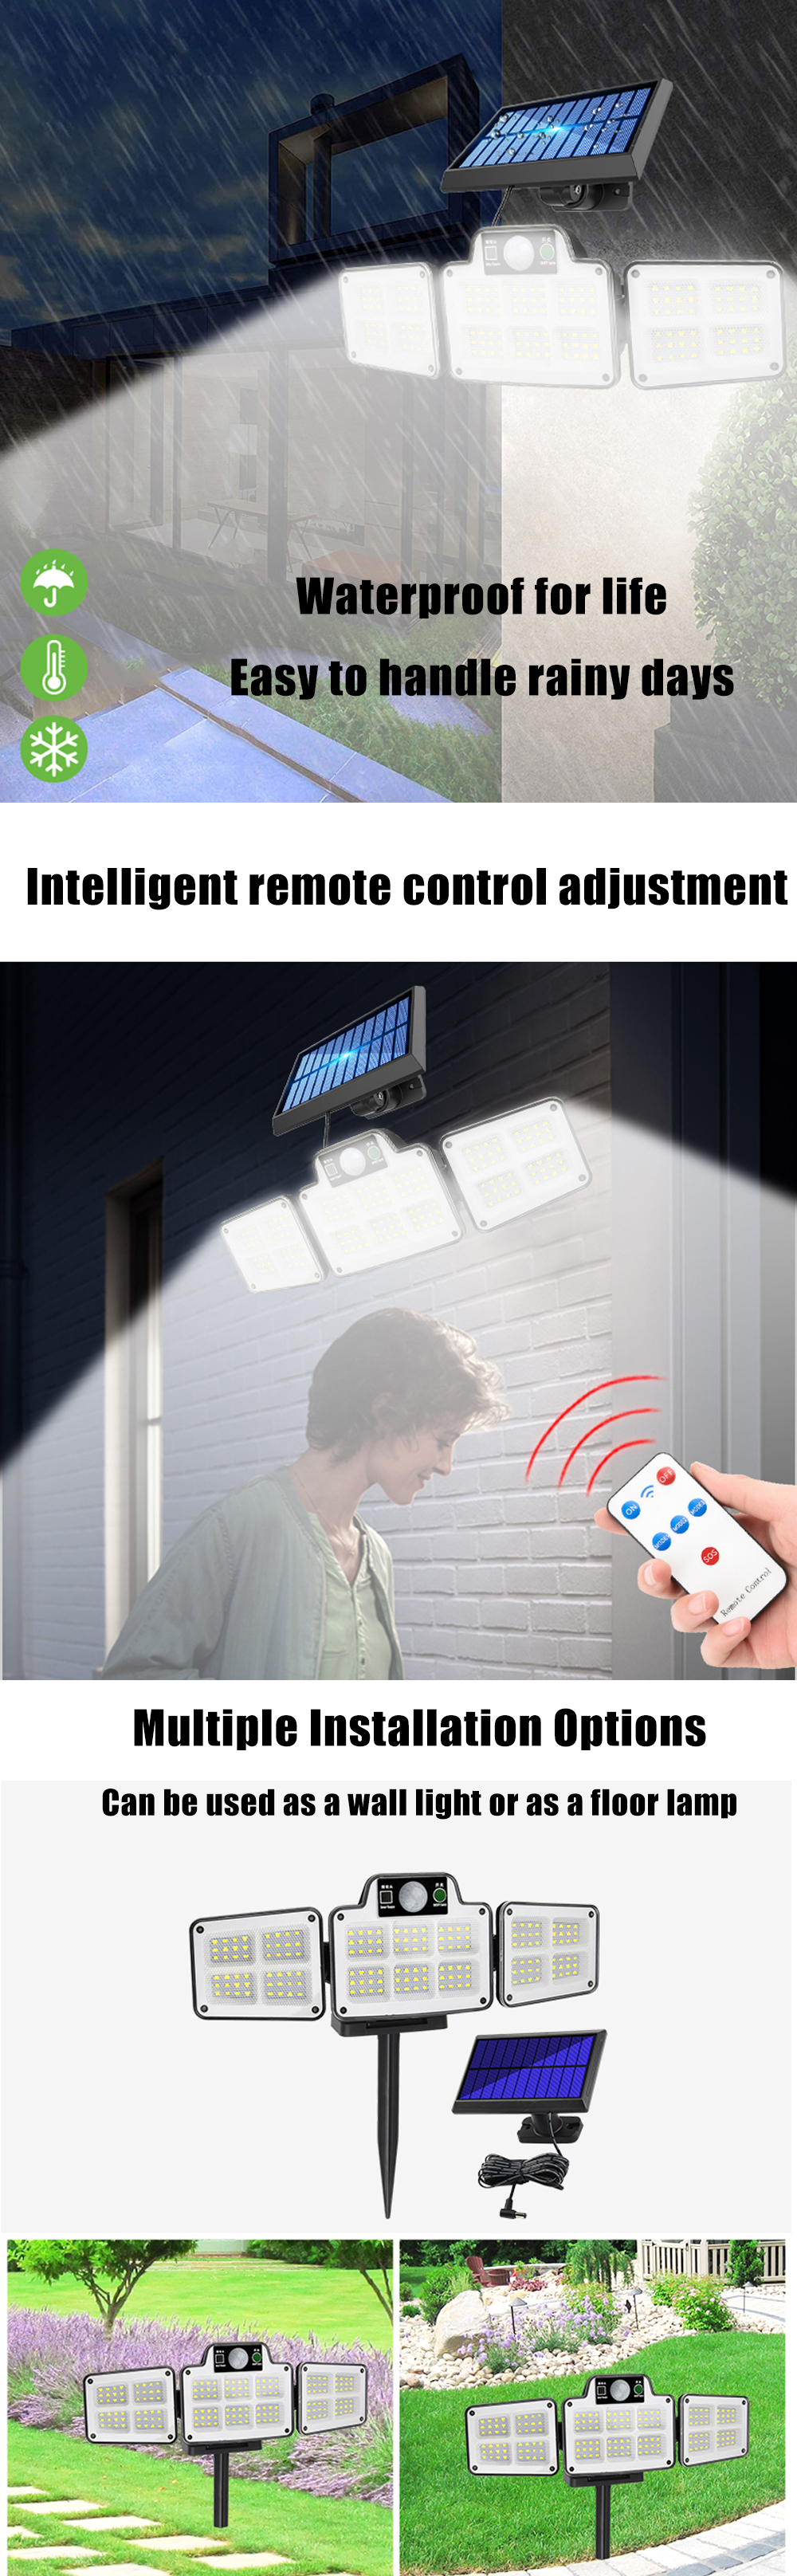 IPReereg-Solar-Wall-Light-with-Remote-Control-Intelligent-Body-Sensor-Light-LED-Split-Adjustable-Wat-1902421-2